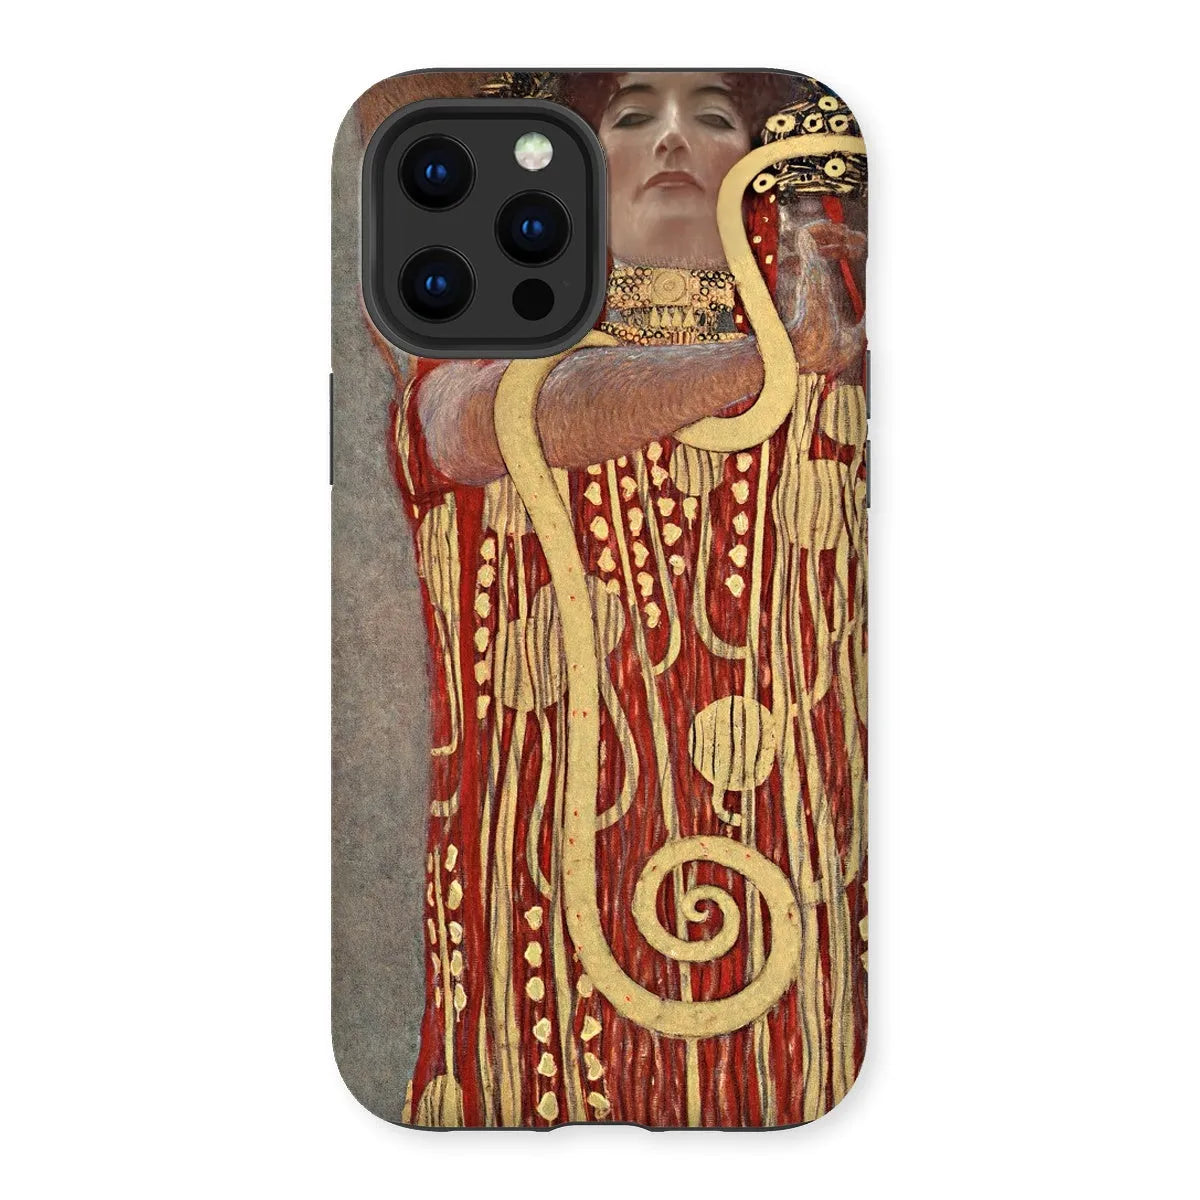 Hygieia - Vienna Succession Phone Case - Gustav Klimt - Iphone 12 Pro Max / Matte - Mobile Phone Cases - Aesthetic Art